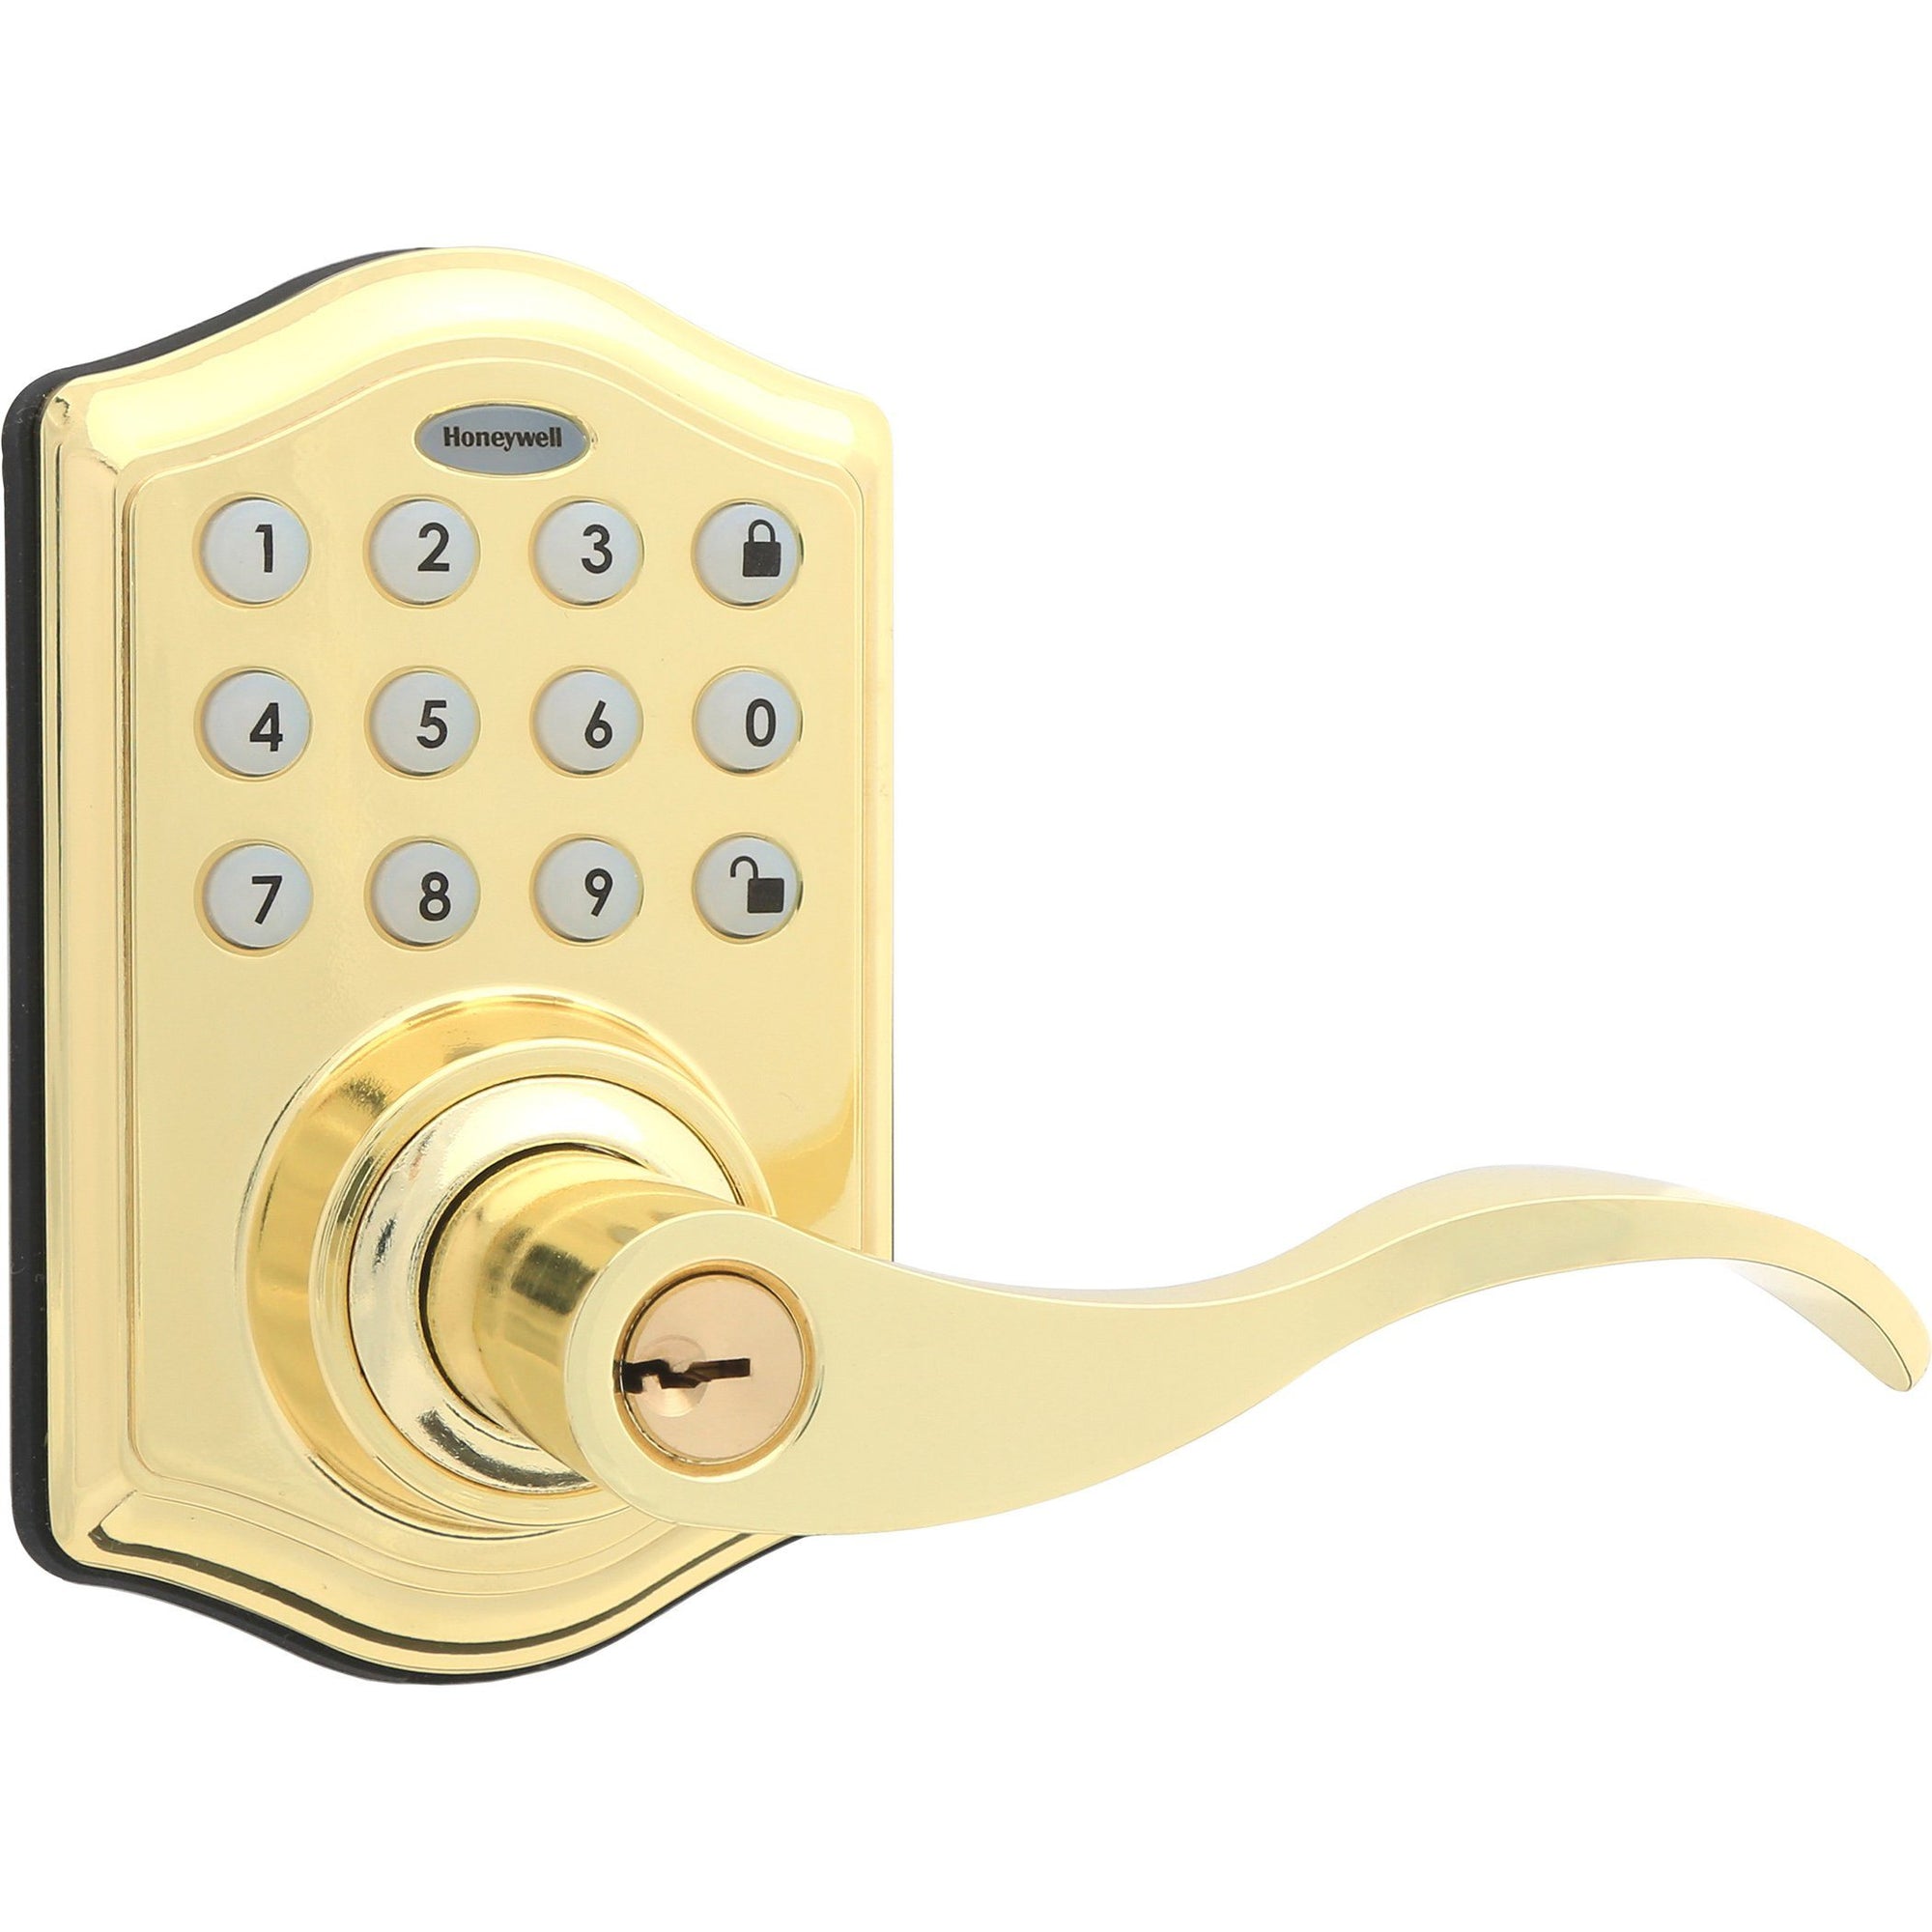 Honeywell 8734001 Electronic Entry Lever Door Lock with Keypad Polished Brass Finish